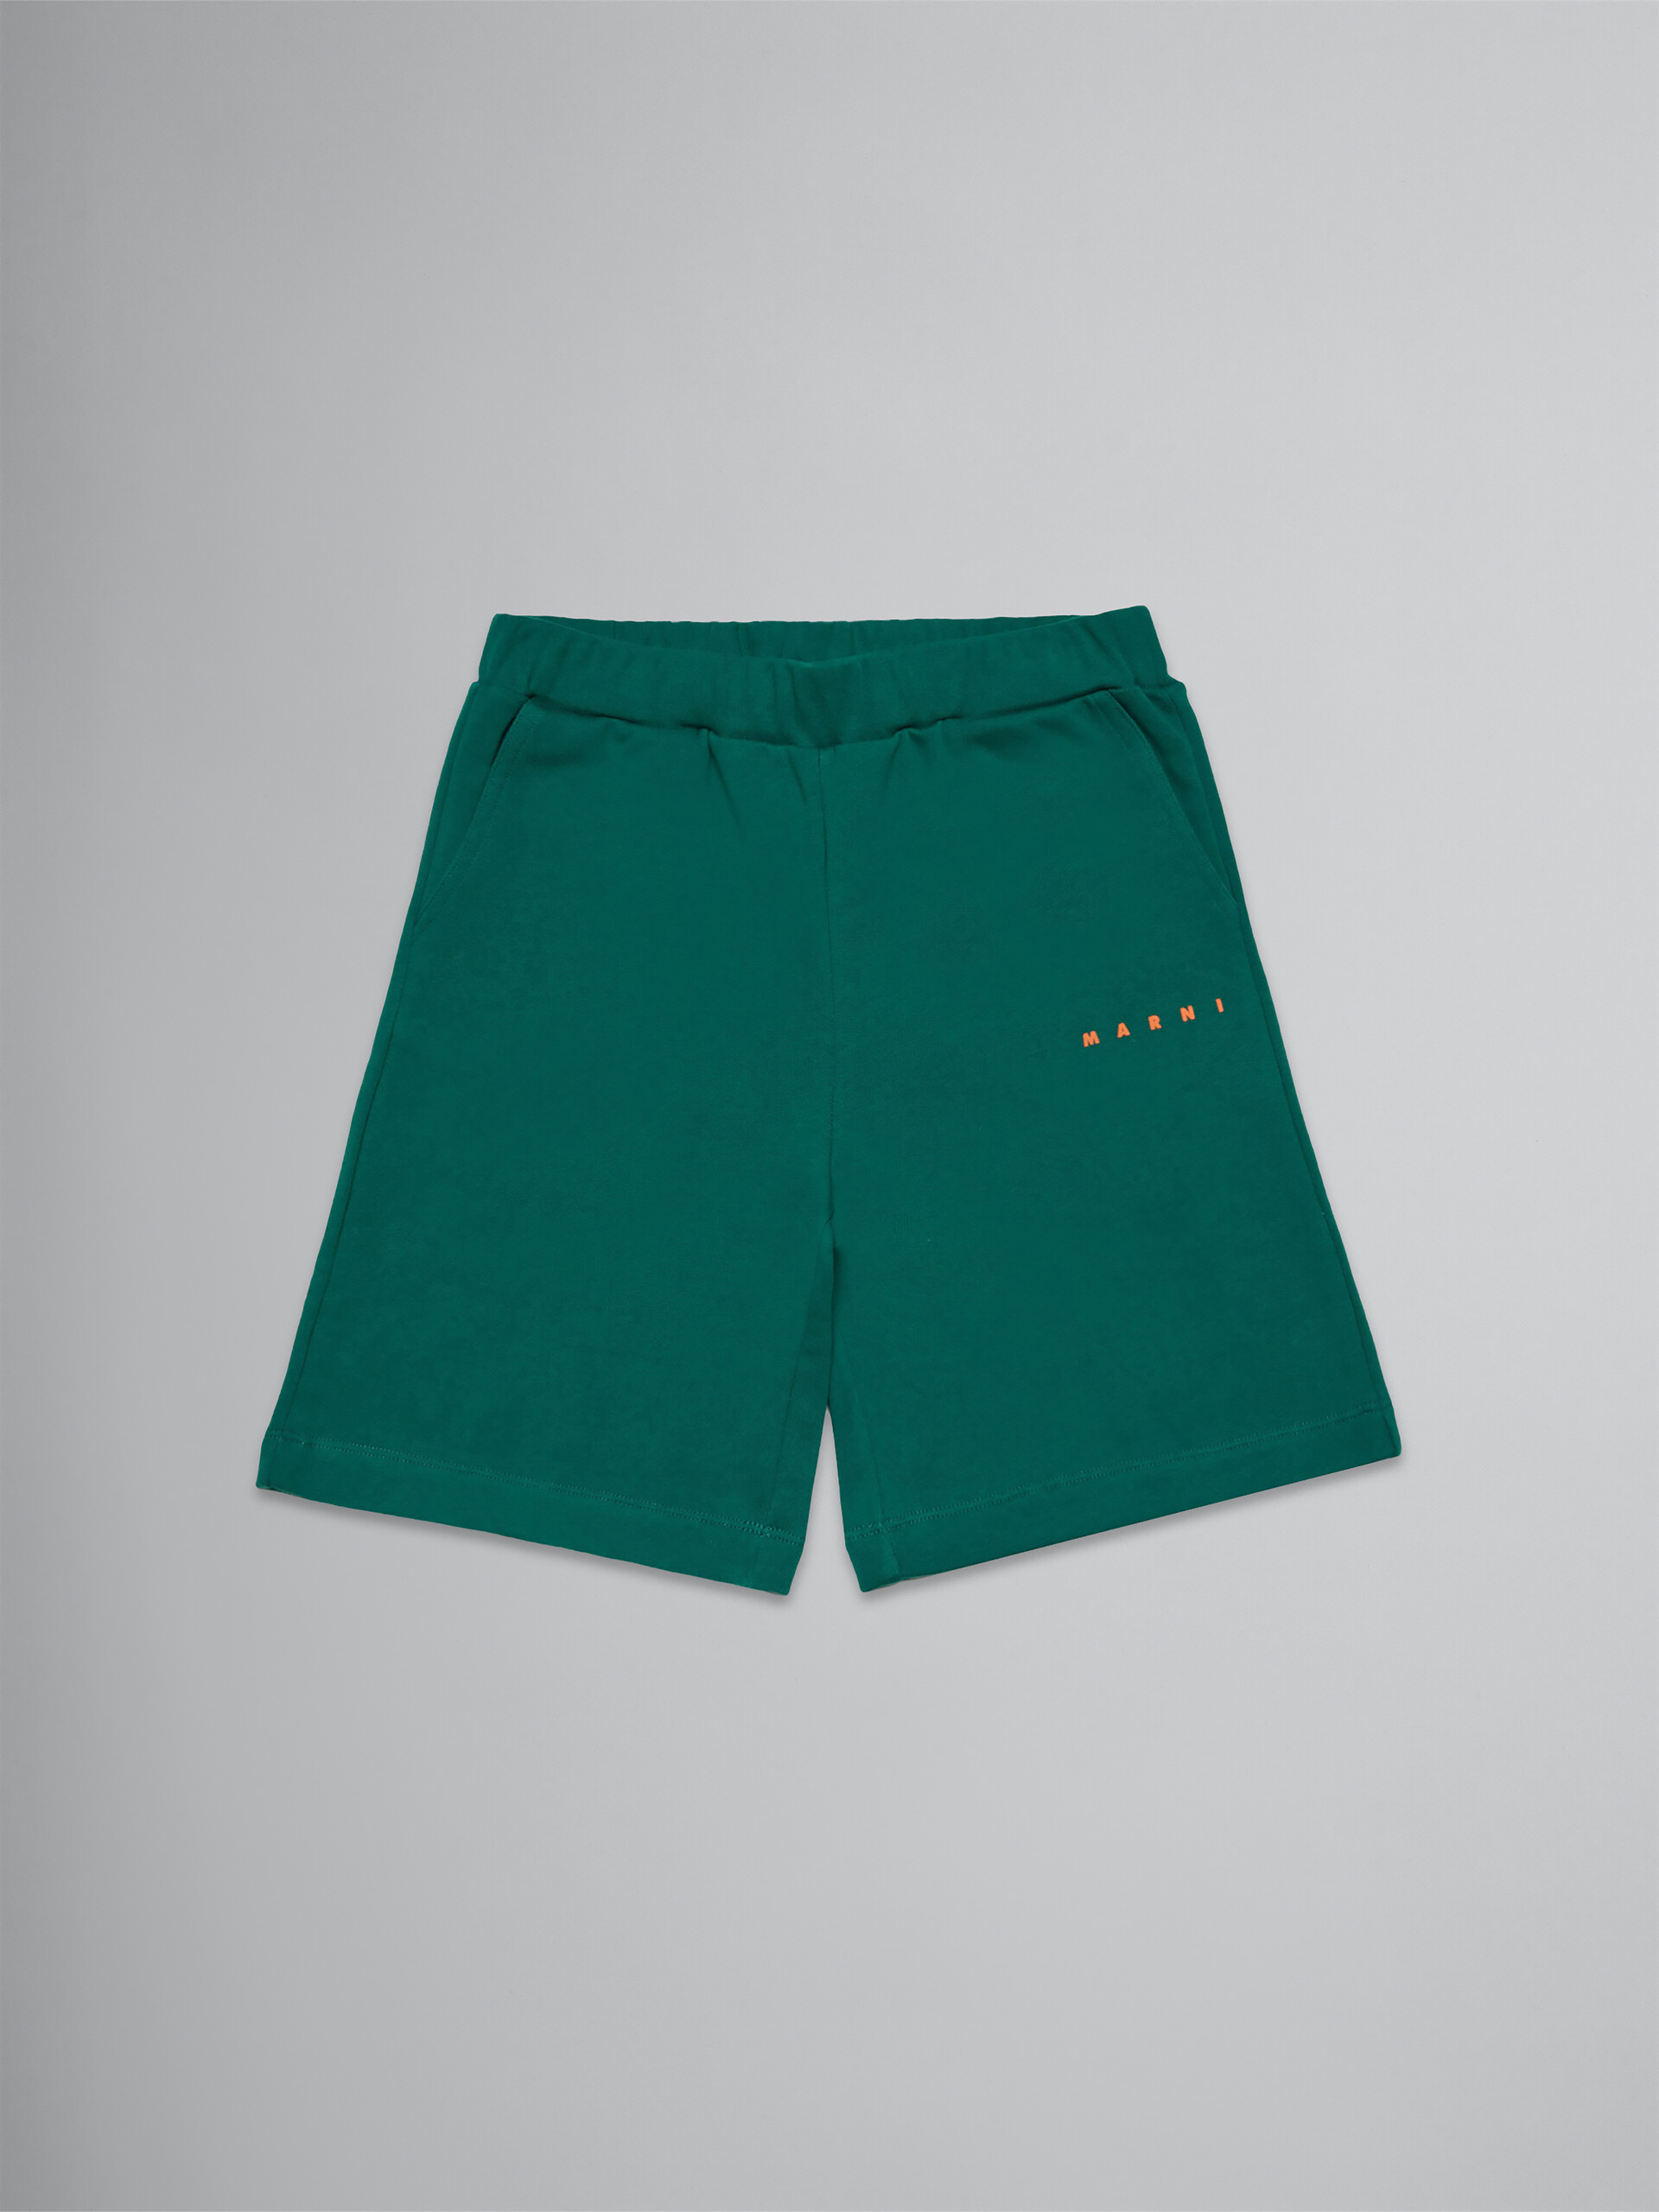 Grüne Fleece-Shorts mit Logo - Hosen - Image 1